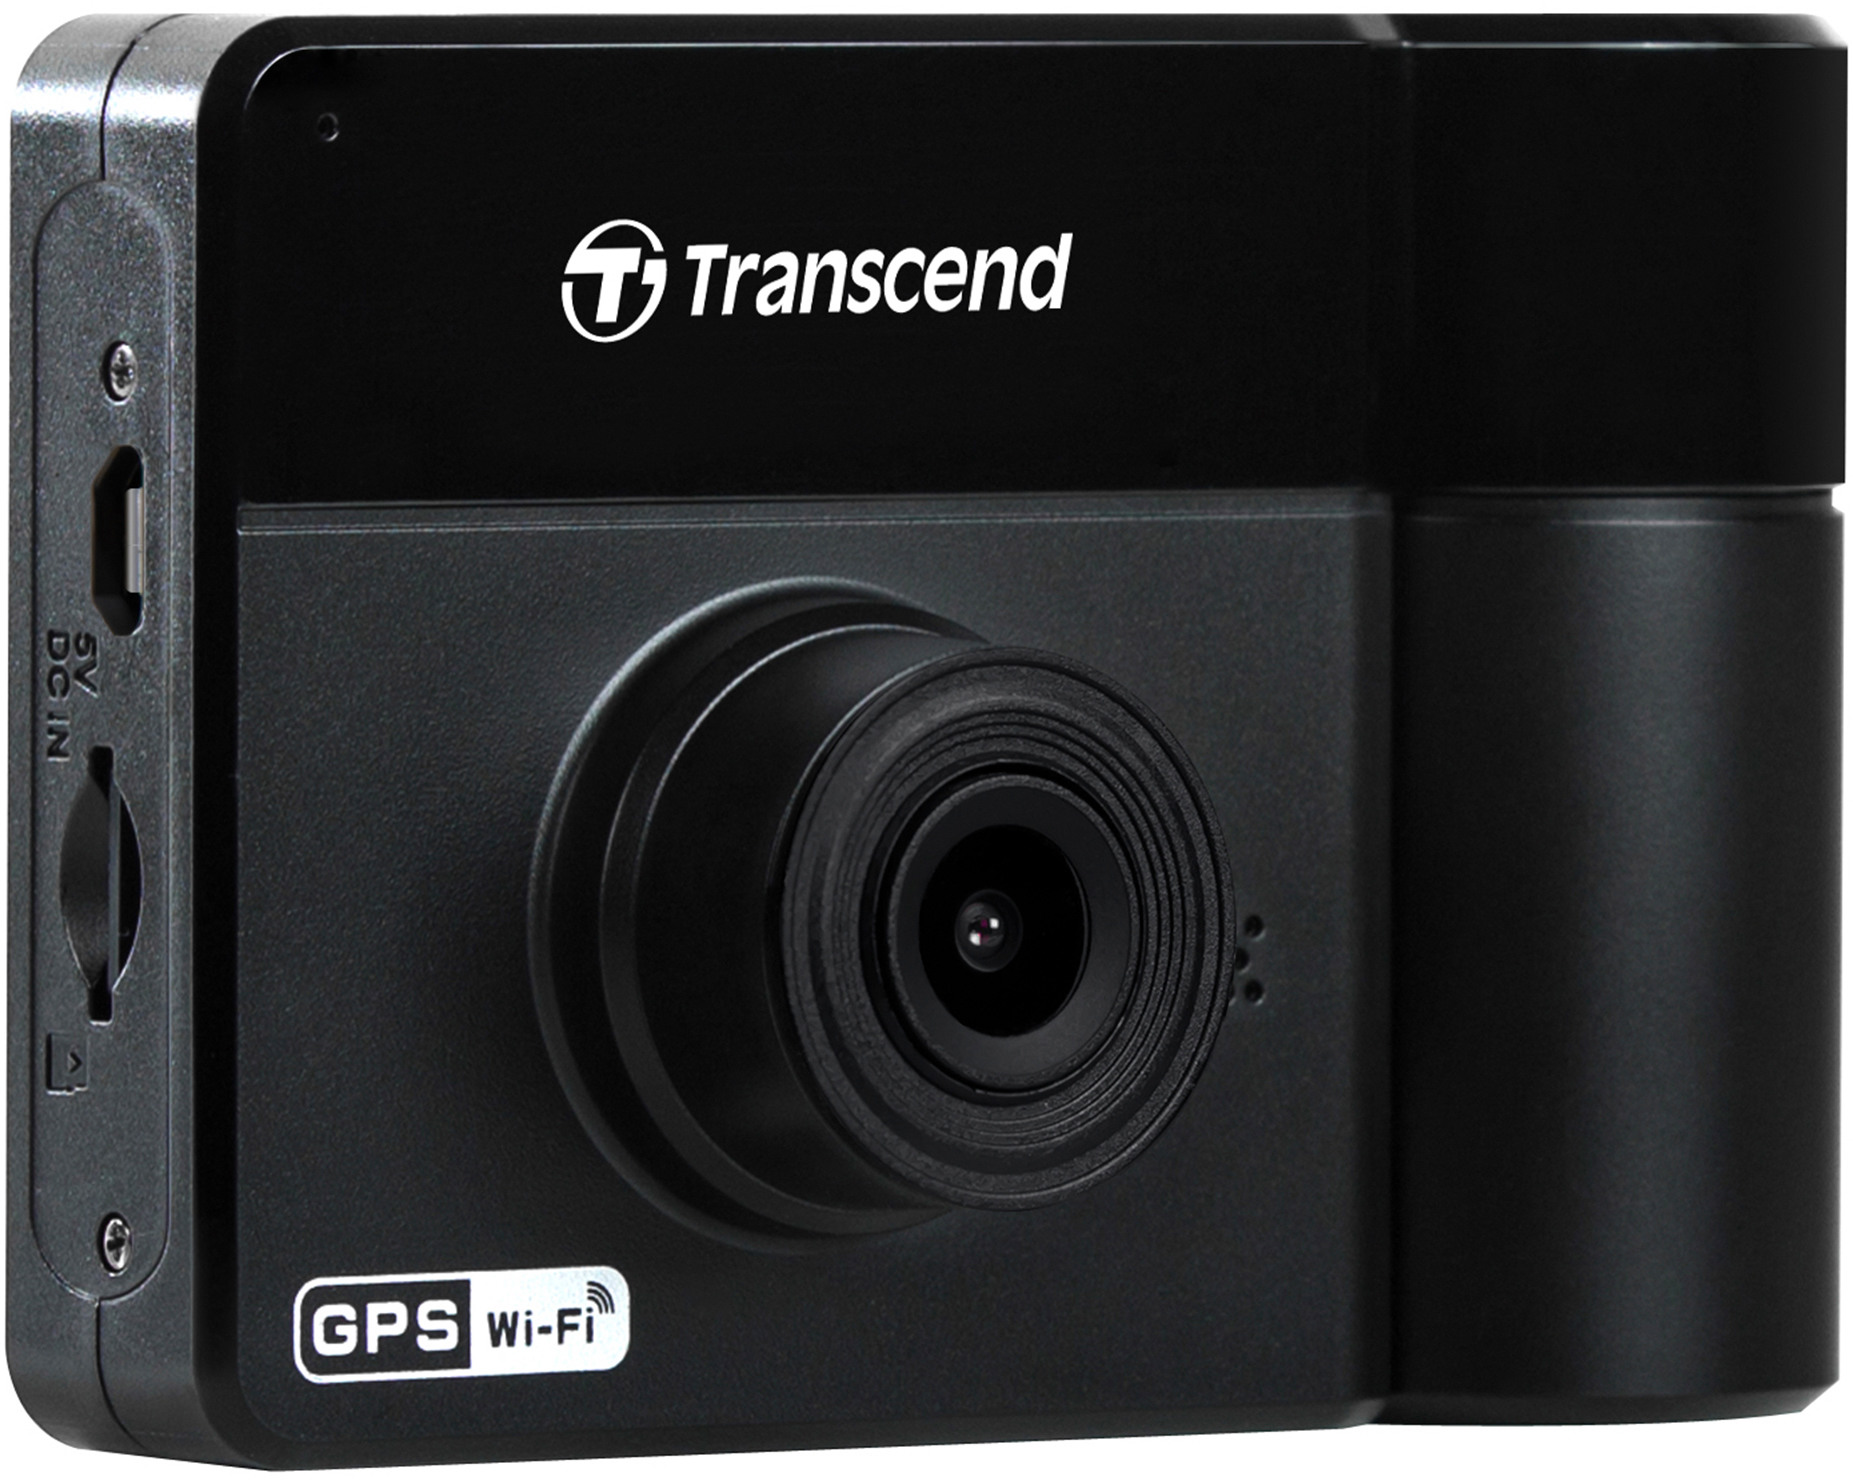 TRANSCEND DrivePro 550 64GB Full HD TSDP550A6 CarVideoRecorder w/DualLens